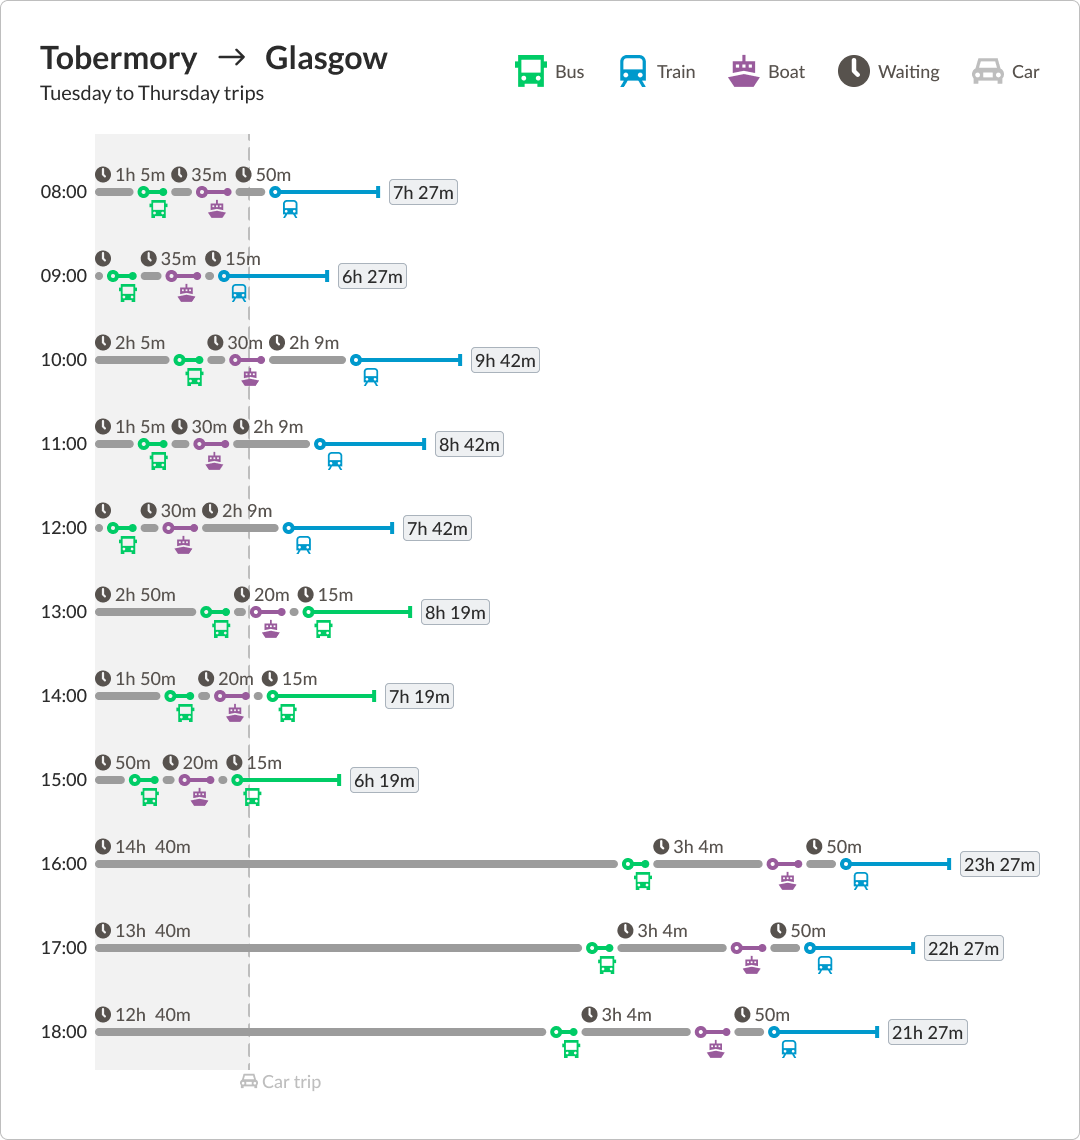 Tobermory-Glasgow Tuesday-Thursday schedules